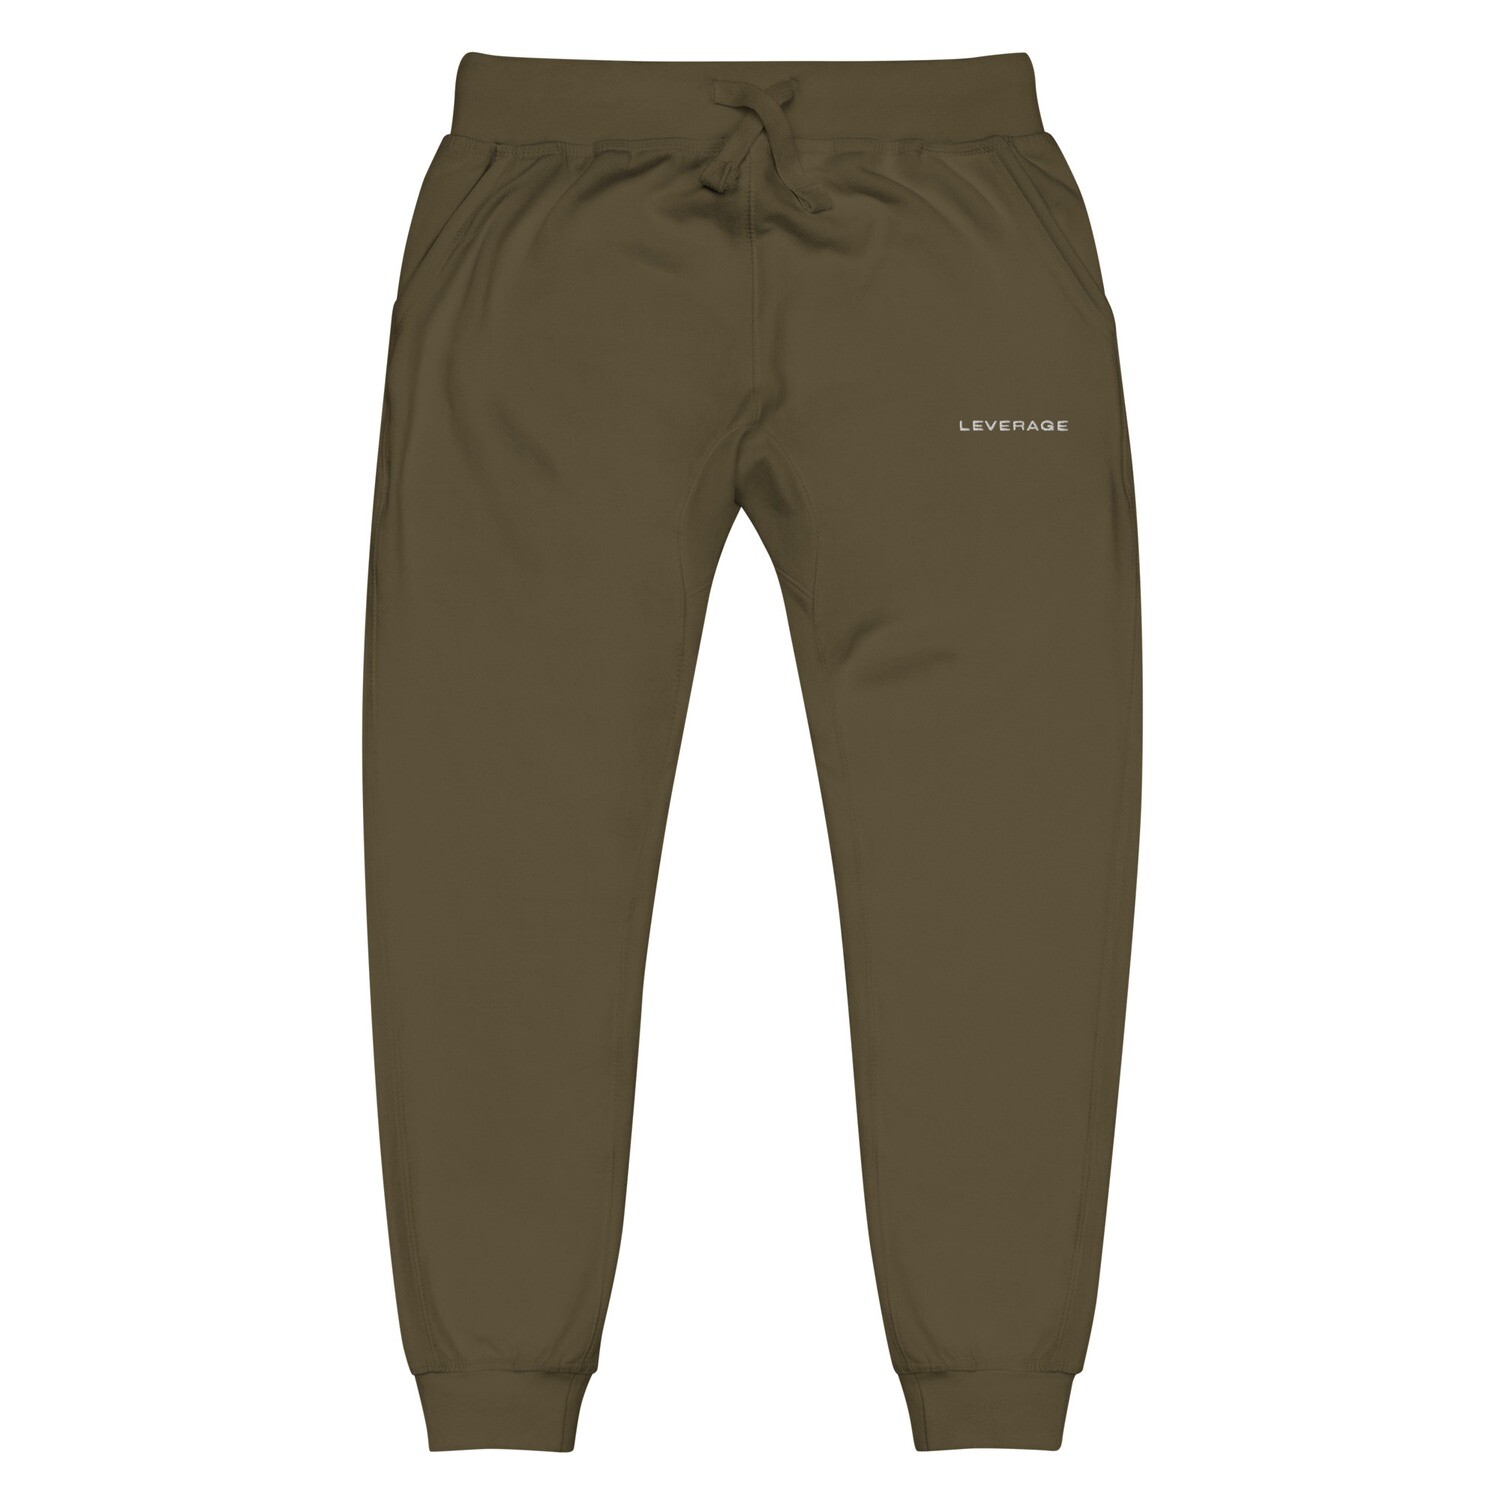 Leverage Premium Sweatpants (Moss)